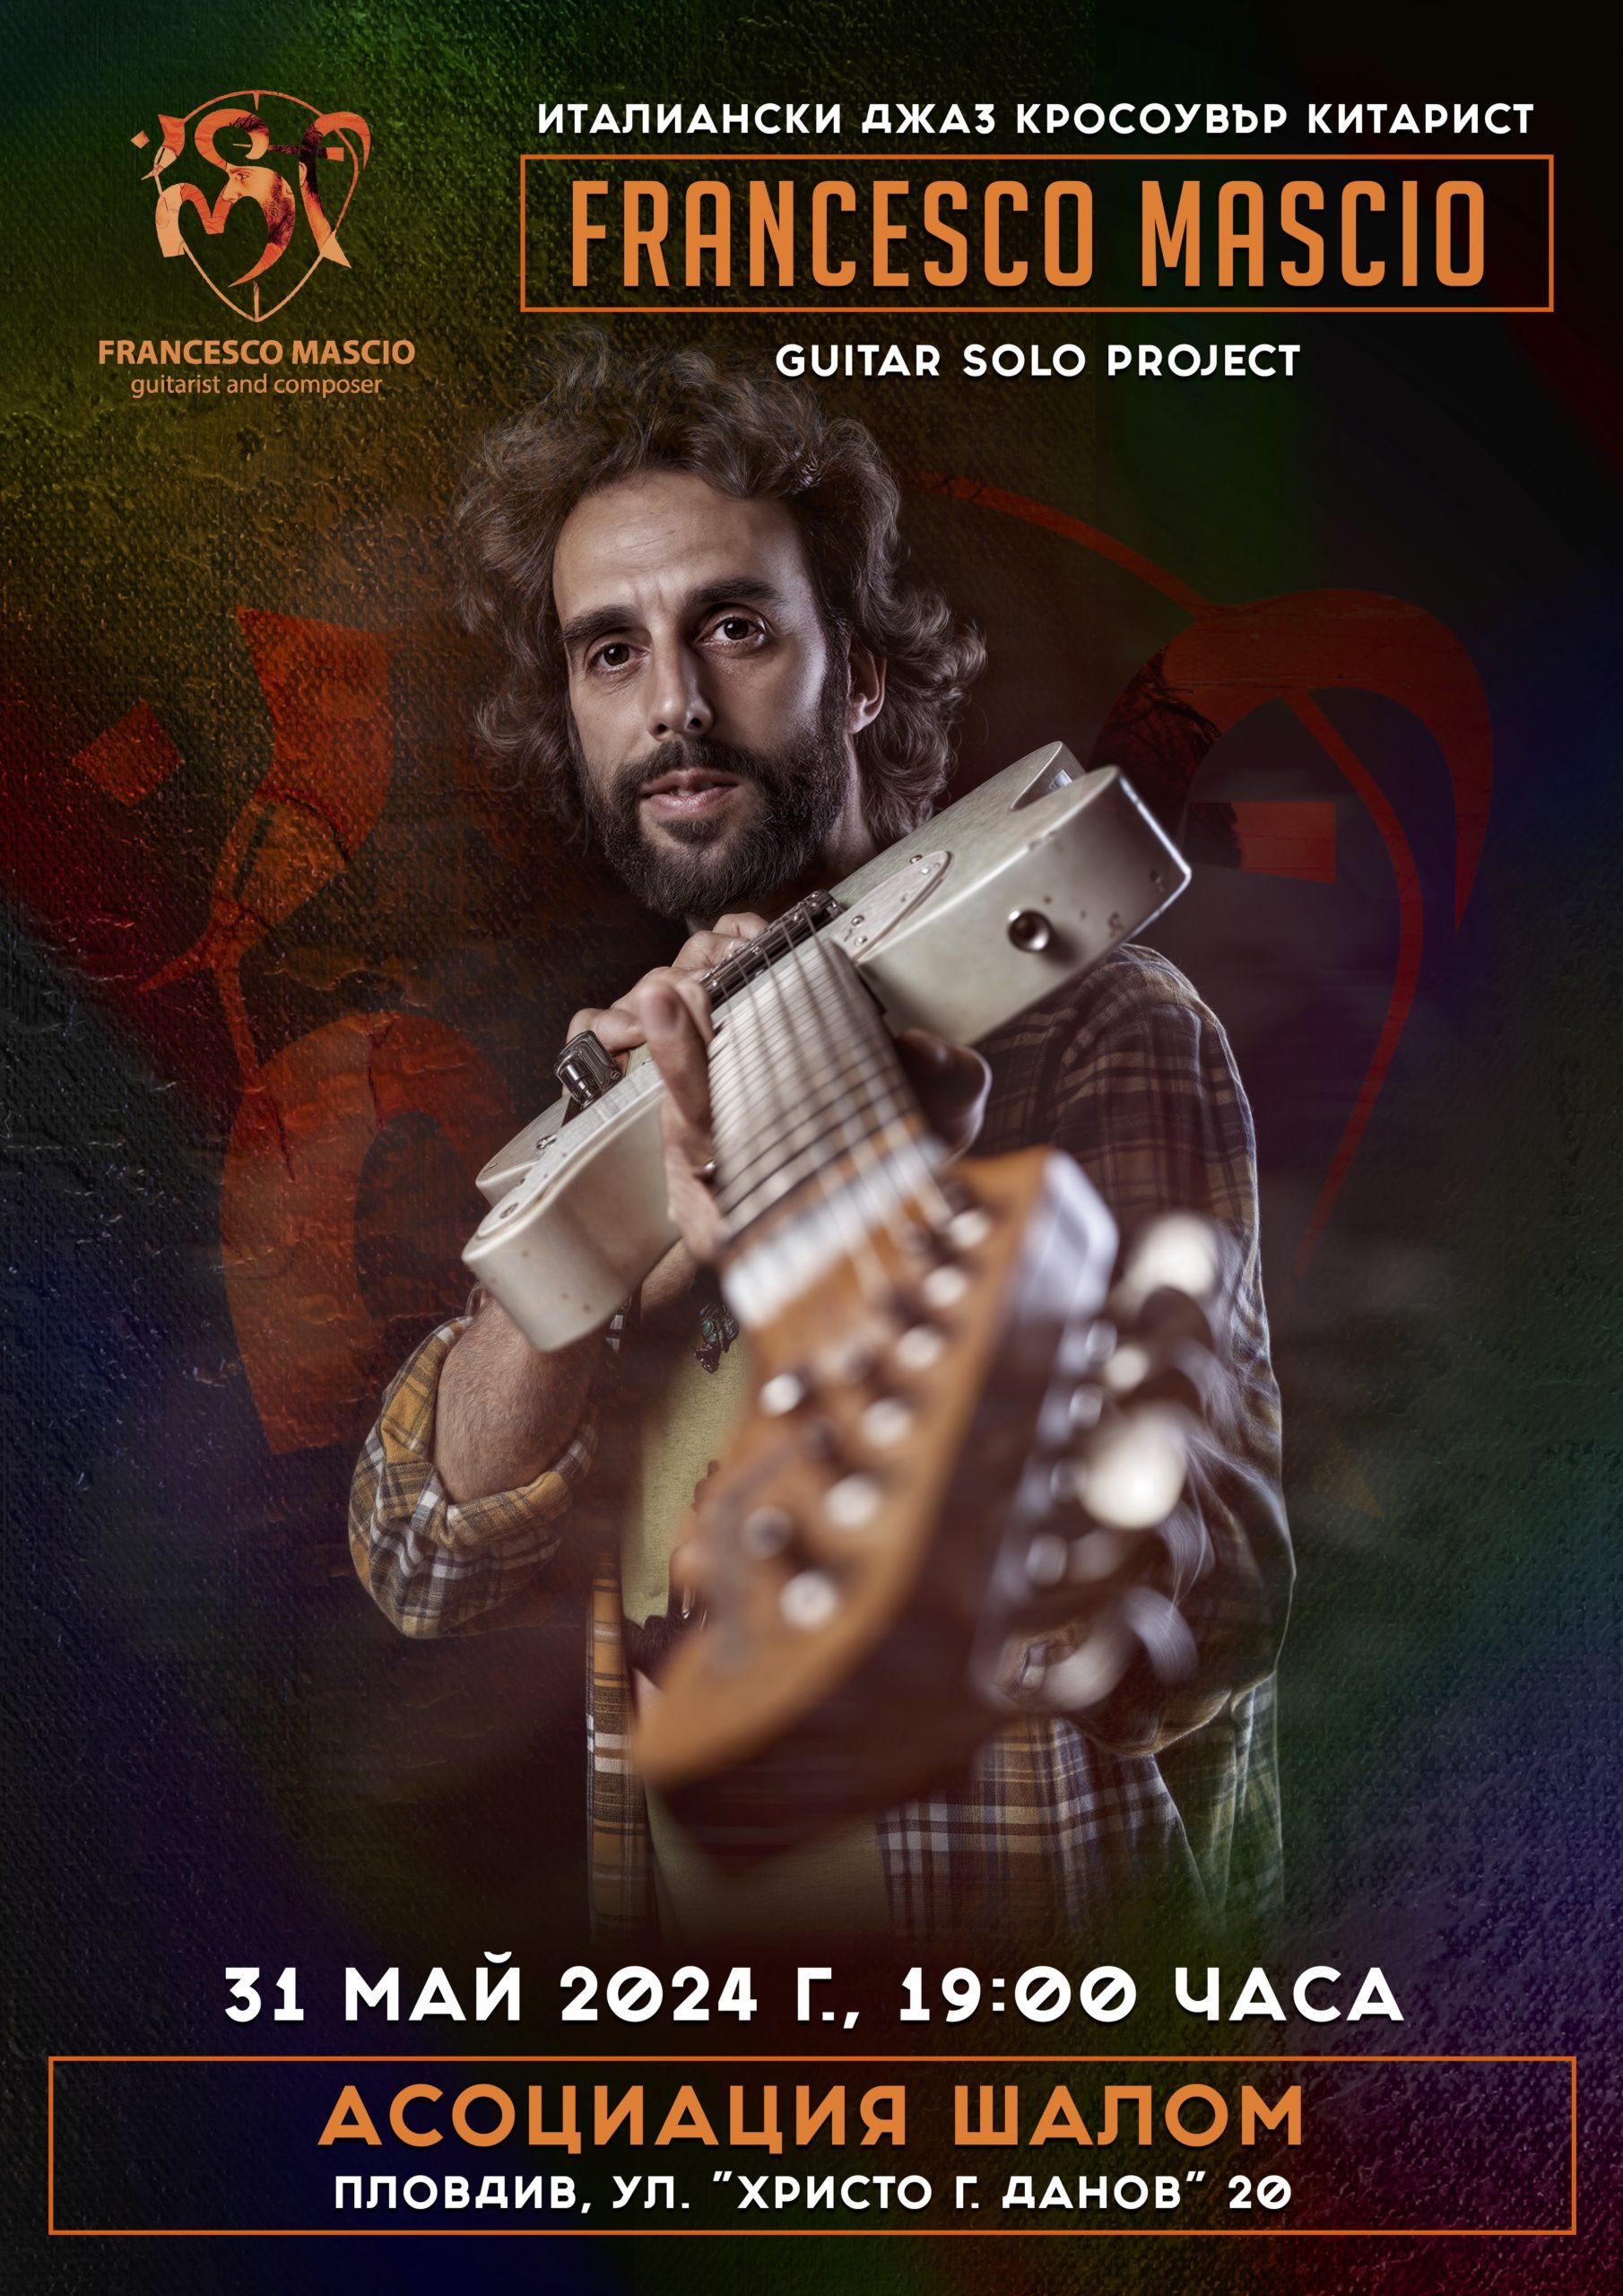 Francesco Mascio Guitar Solo